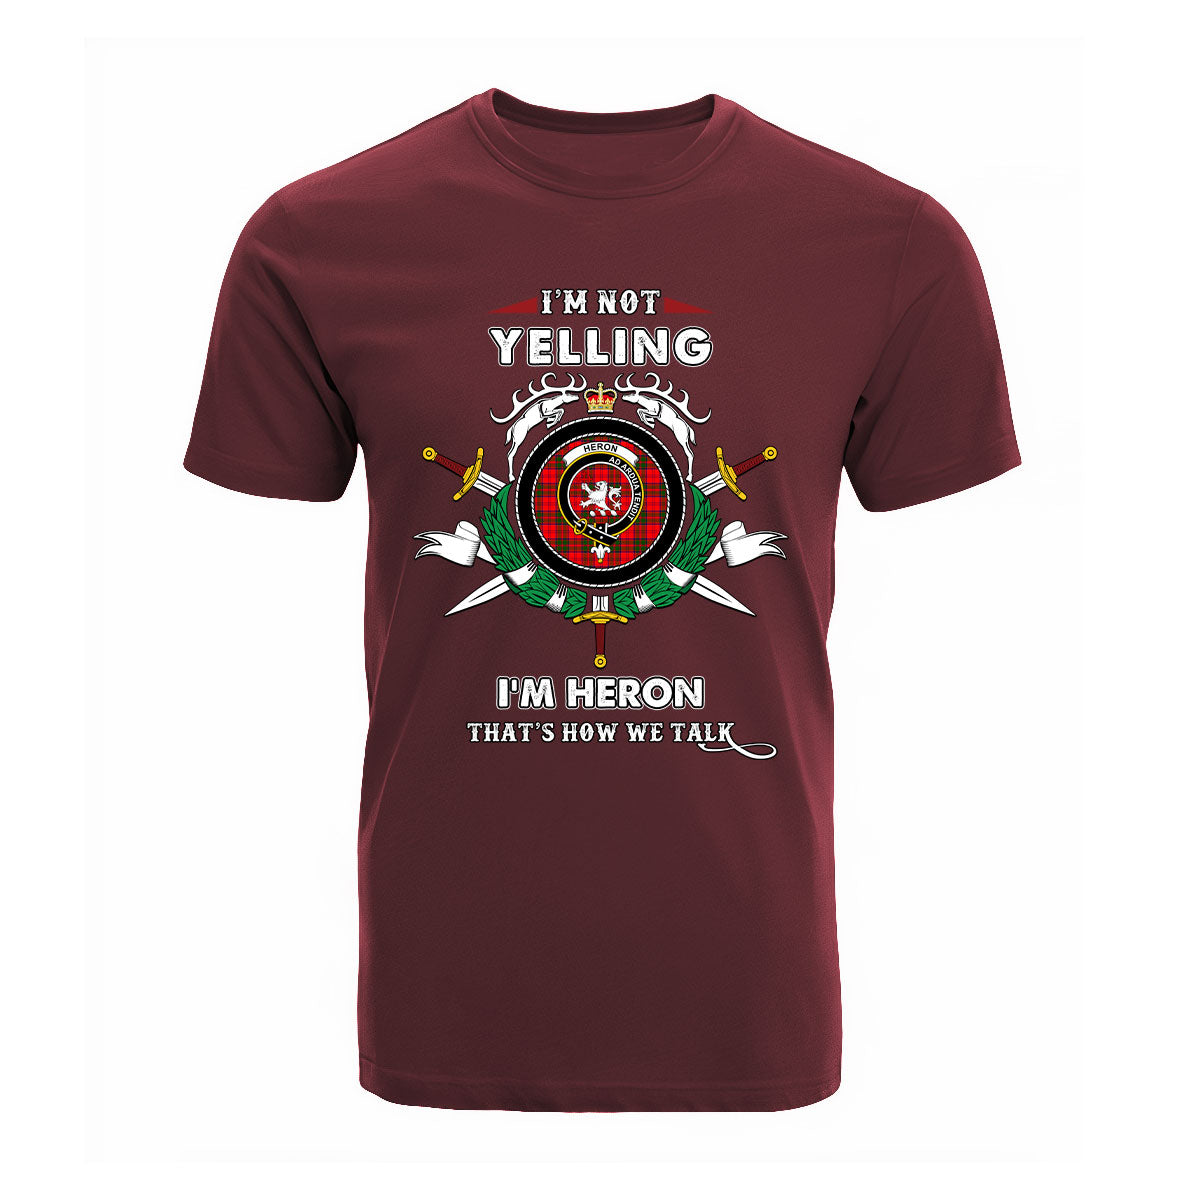 Heron Tartan Crest T-shirt - I'm not yelling style